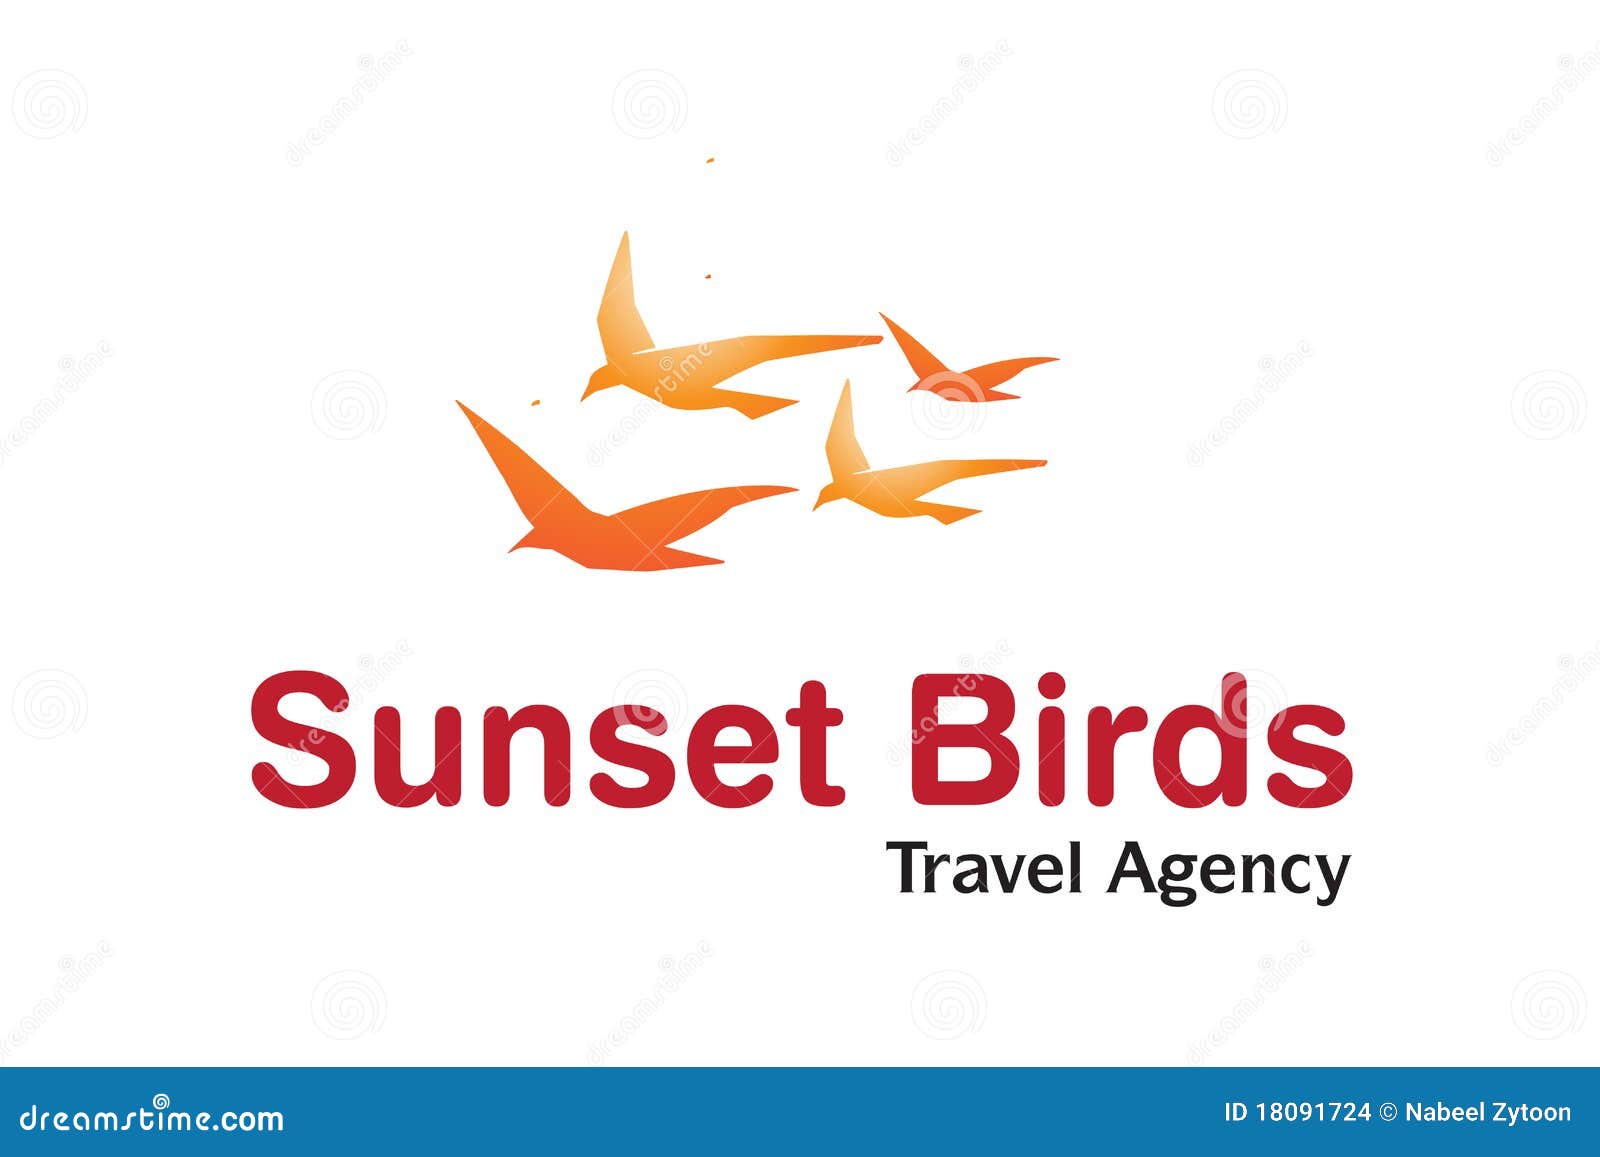 Travel Agency Logo Design Stock Images - Image: 18091724